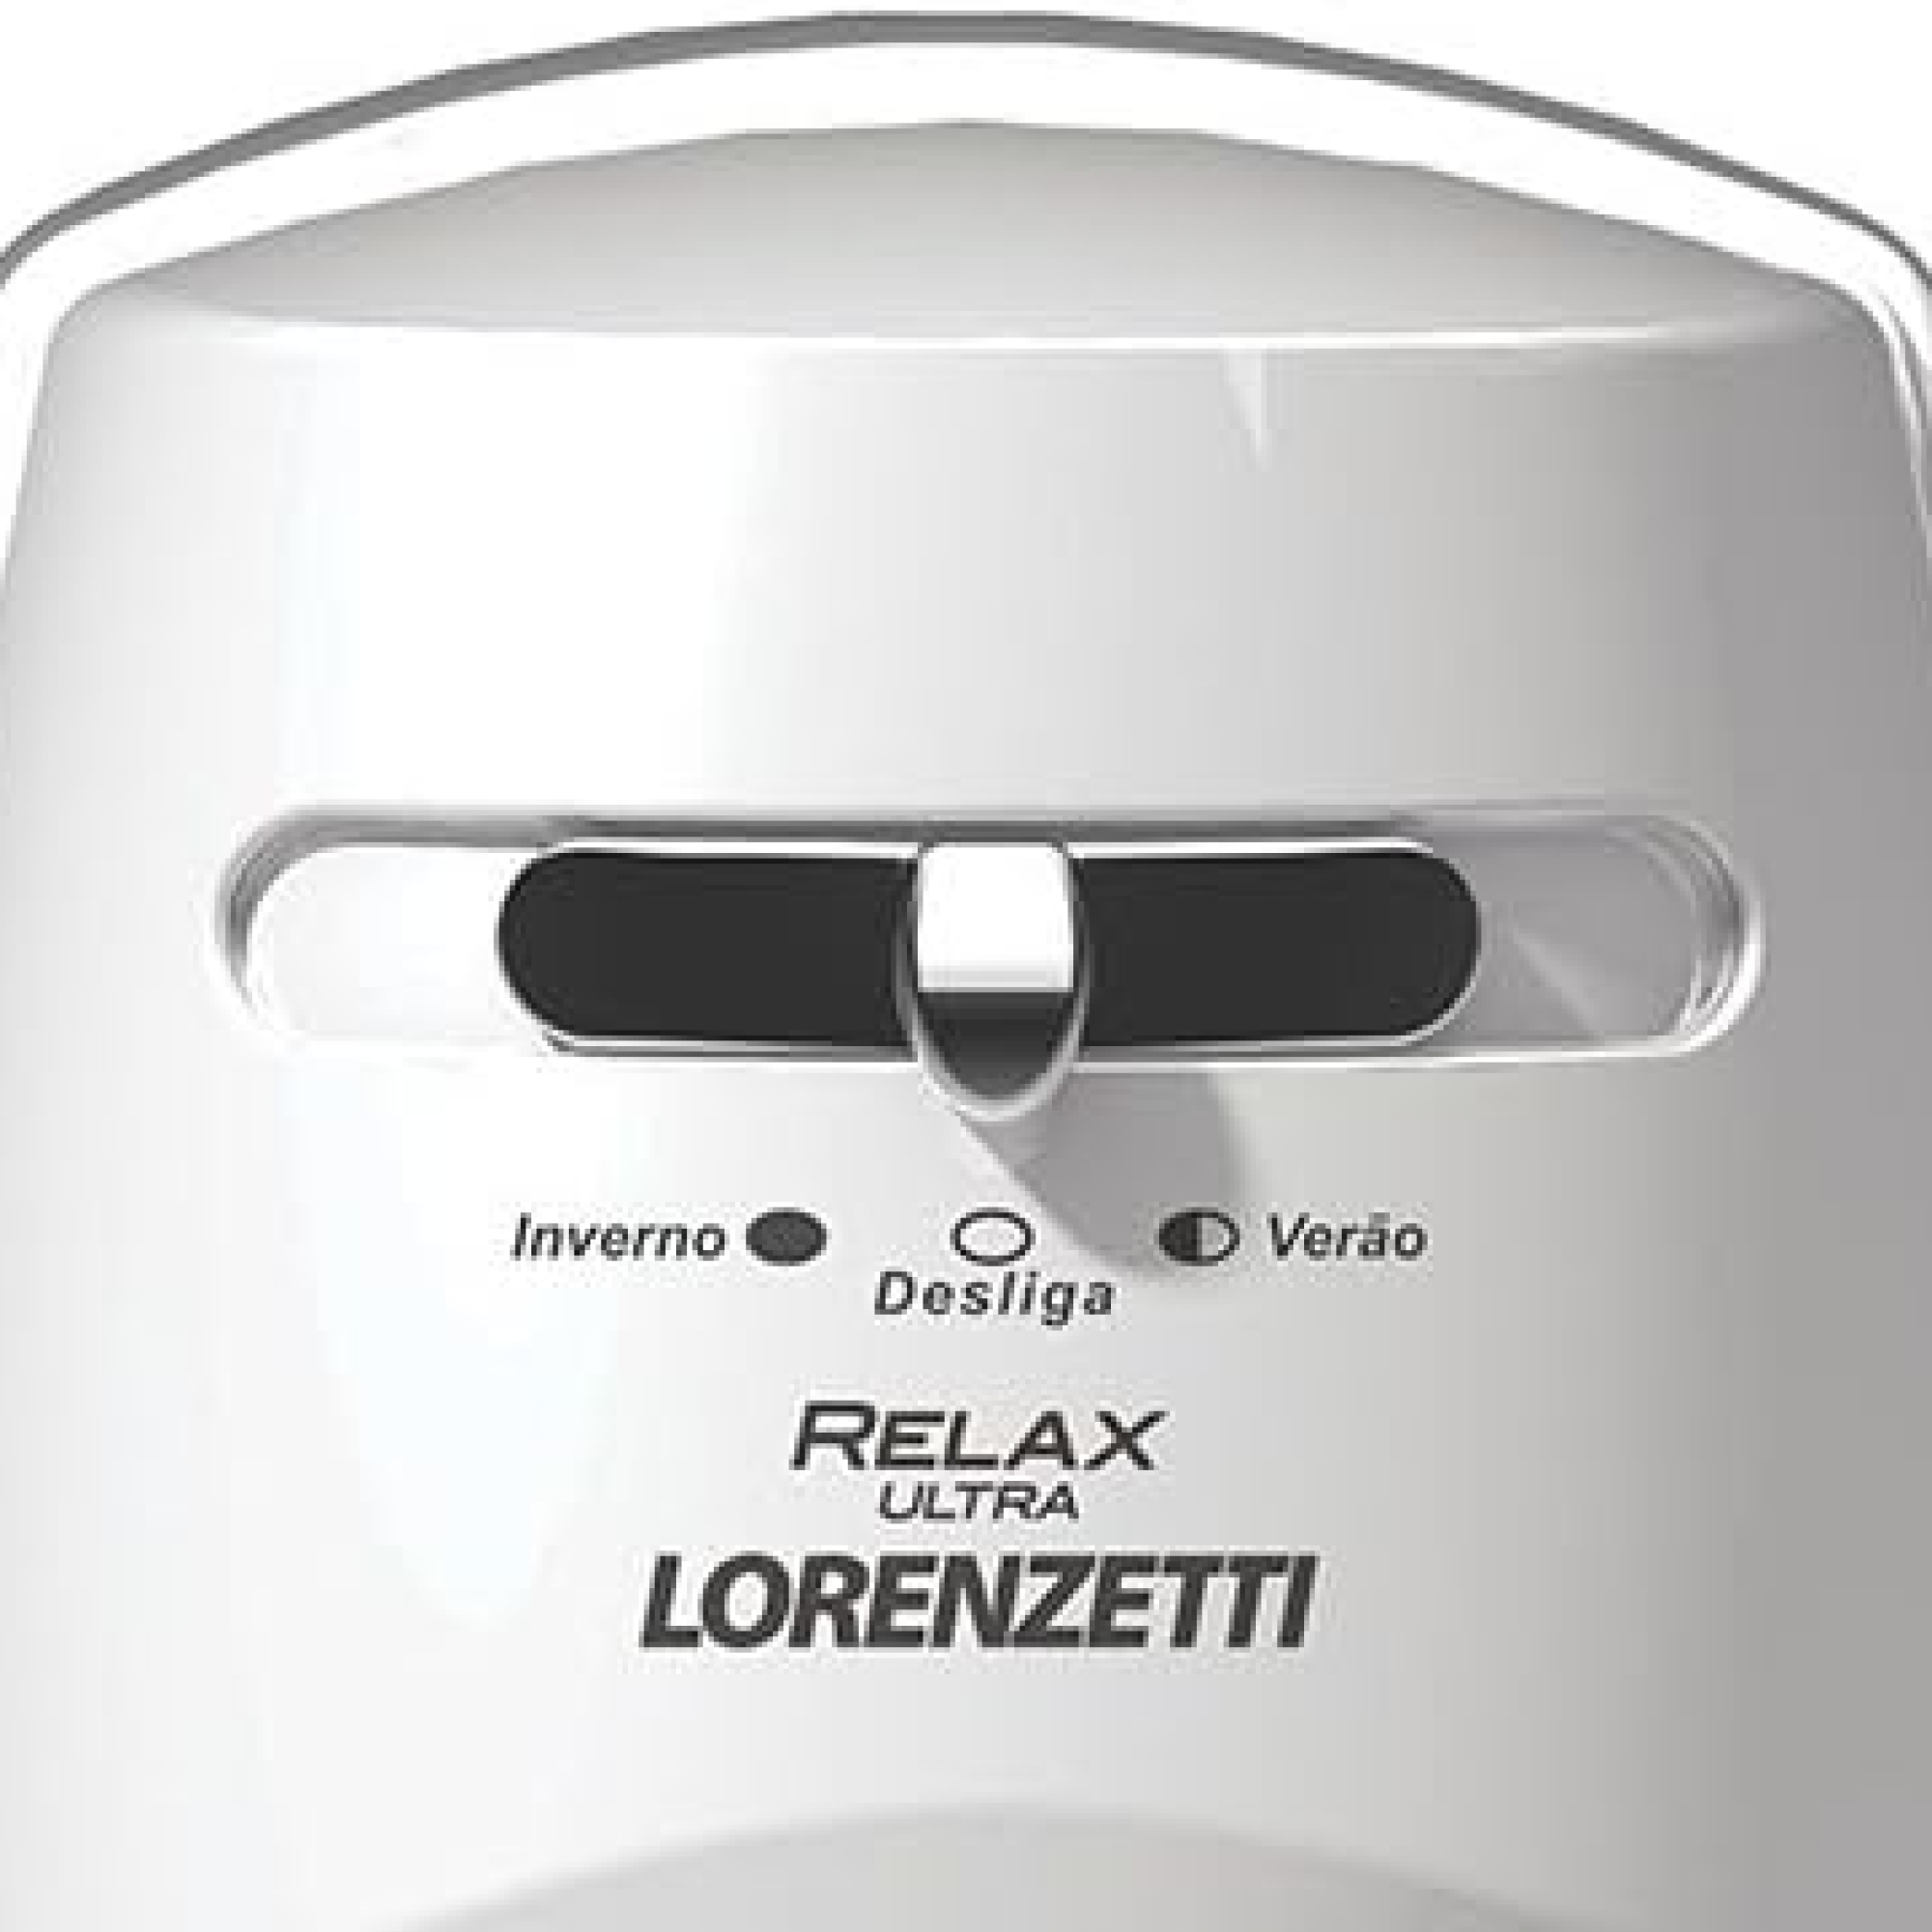 Lorenzetti Relax Branco/Cromado 220V 5500W - 5